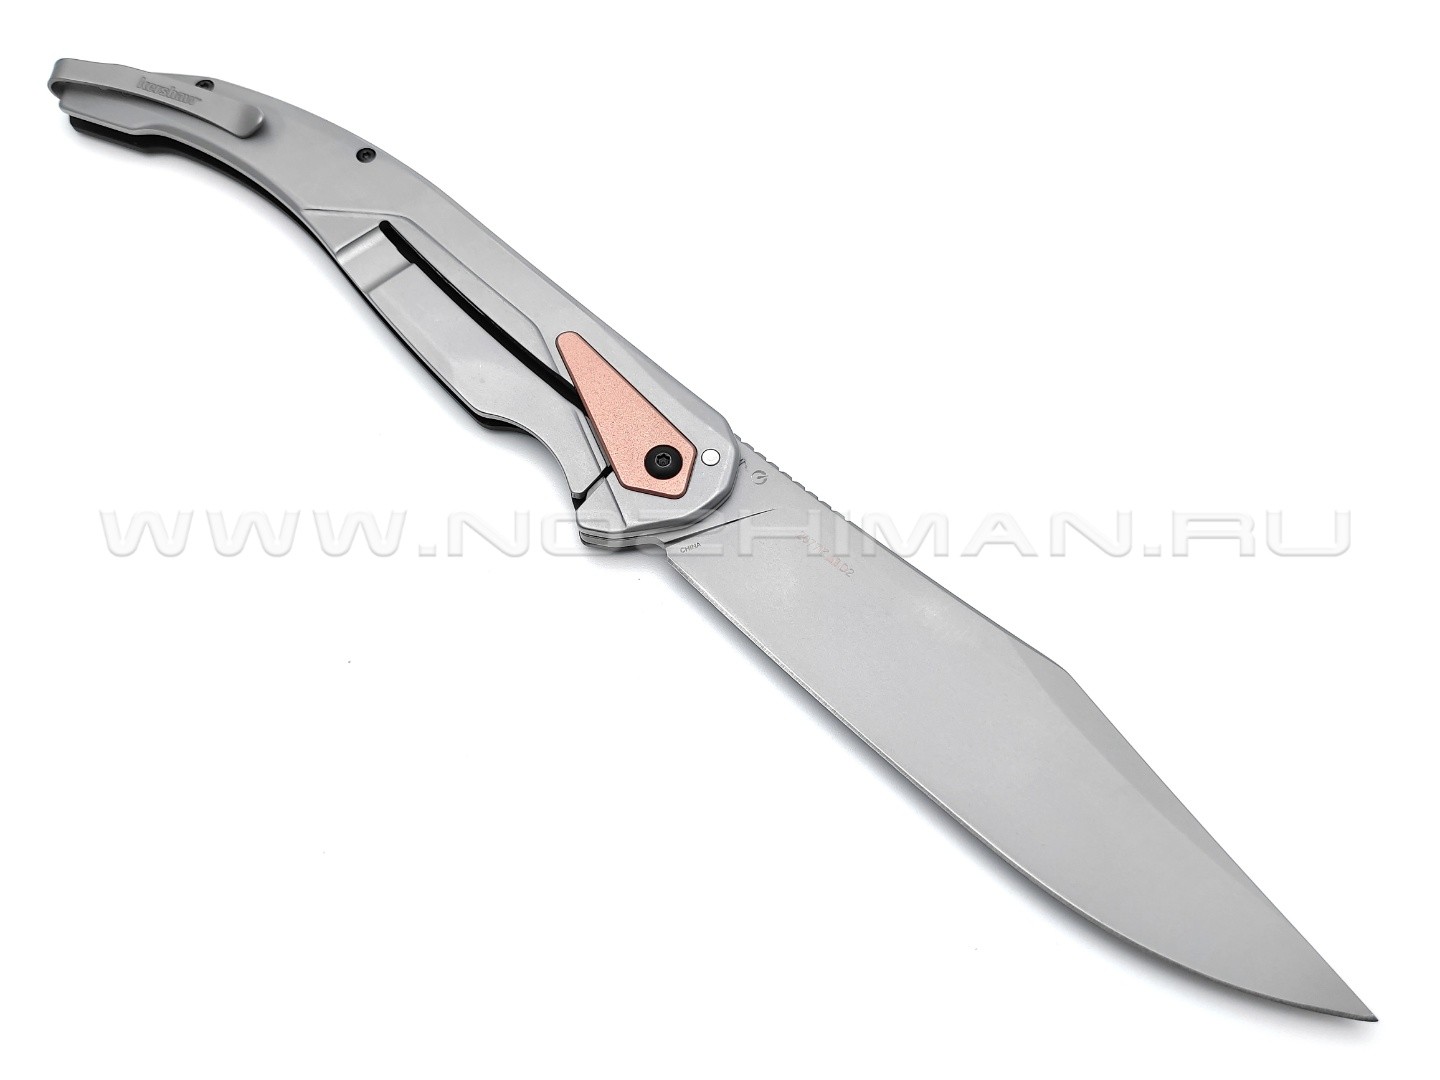 Kershaw нож Strata XL 2077 сталь D2, рукоять G10/сталь